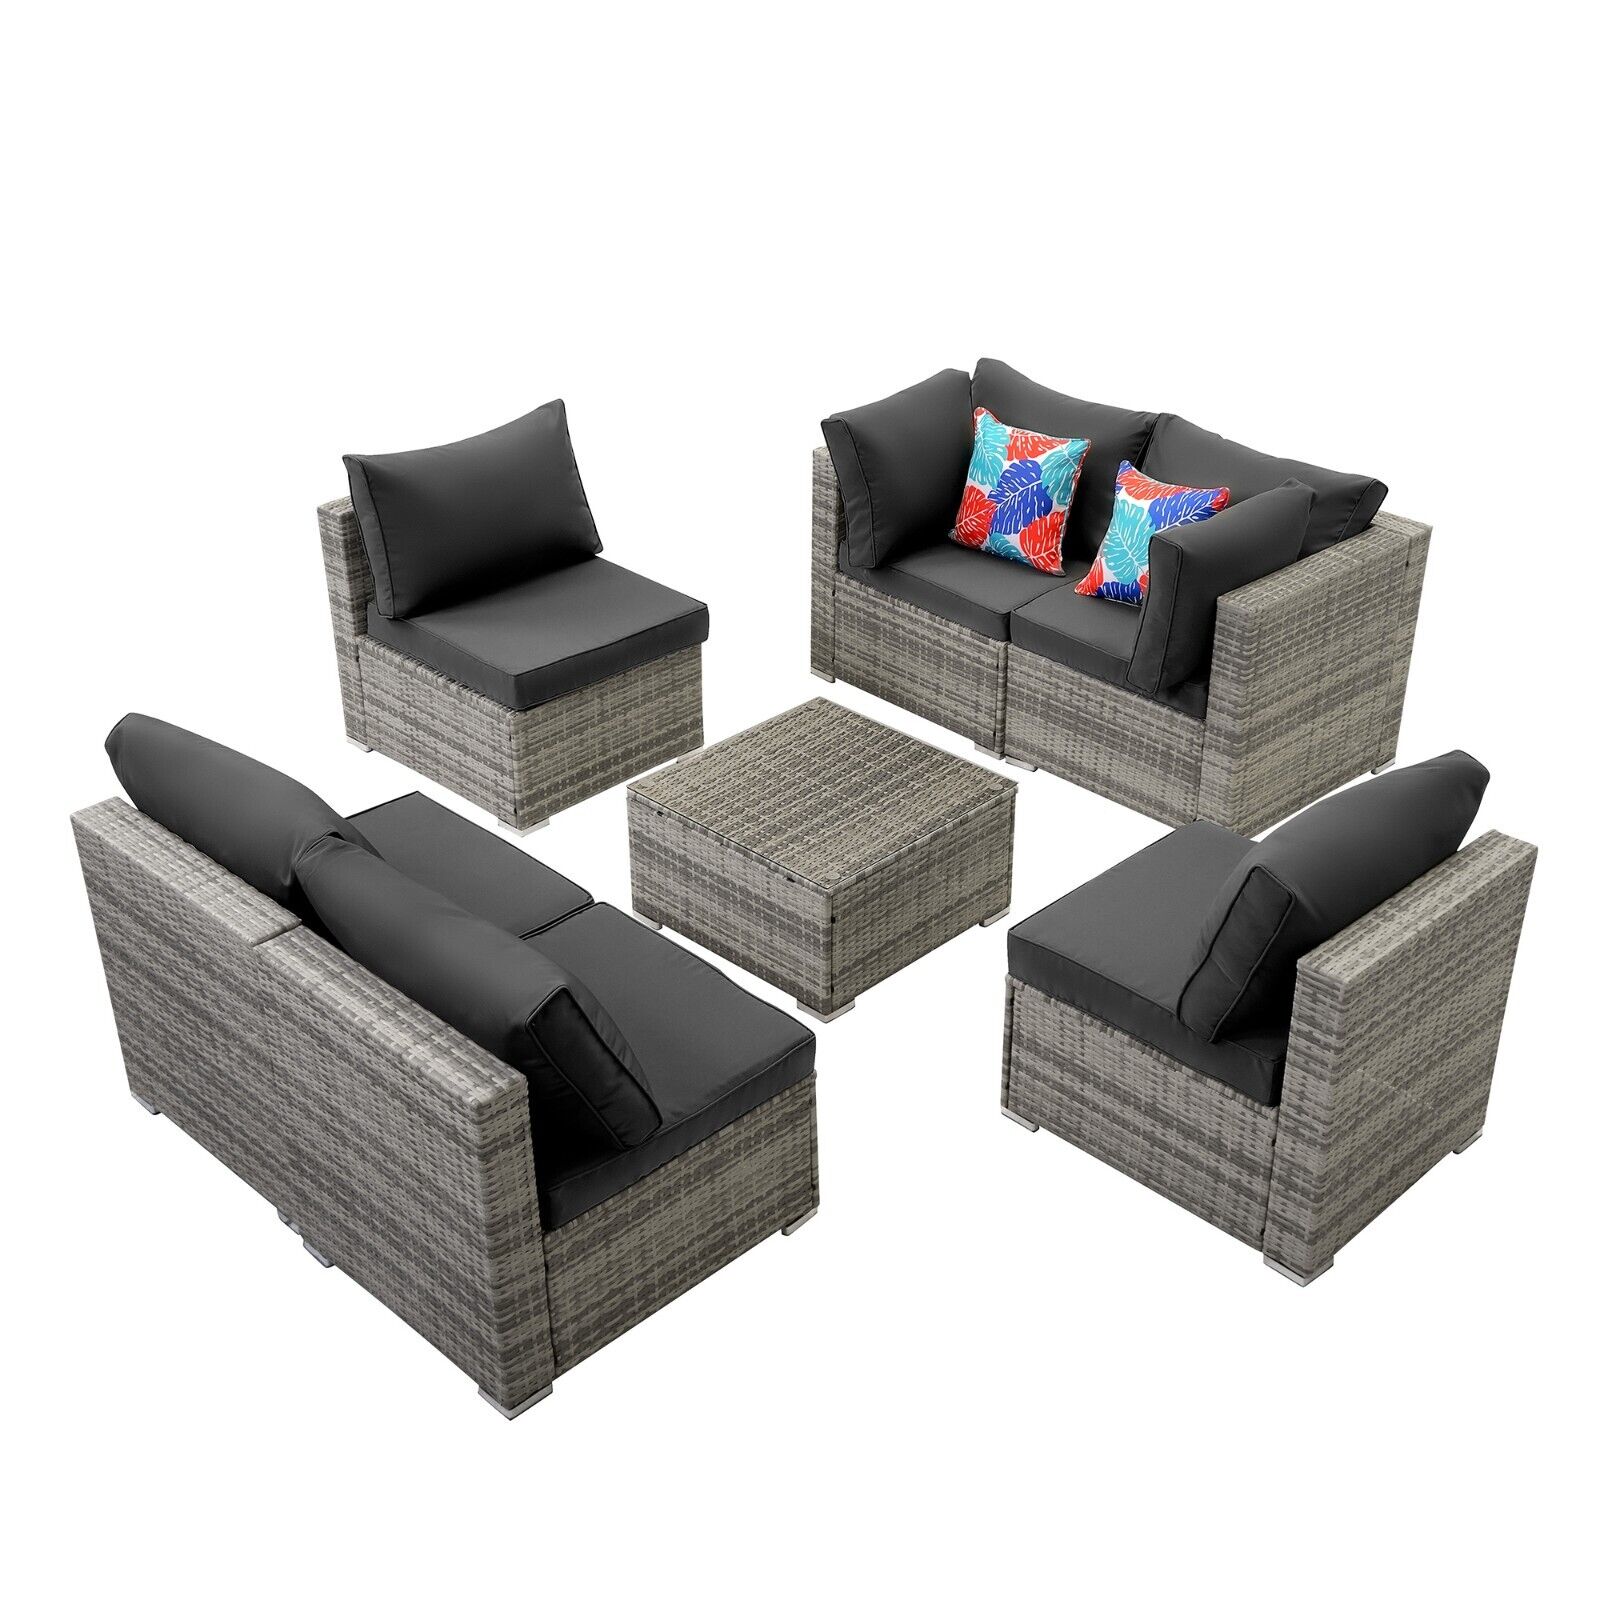 Mondawe 7 Piece Patio Outdoor Wicker Conversation Sofa Set w/Cushions,Pillows